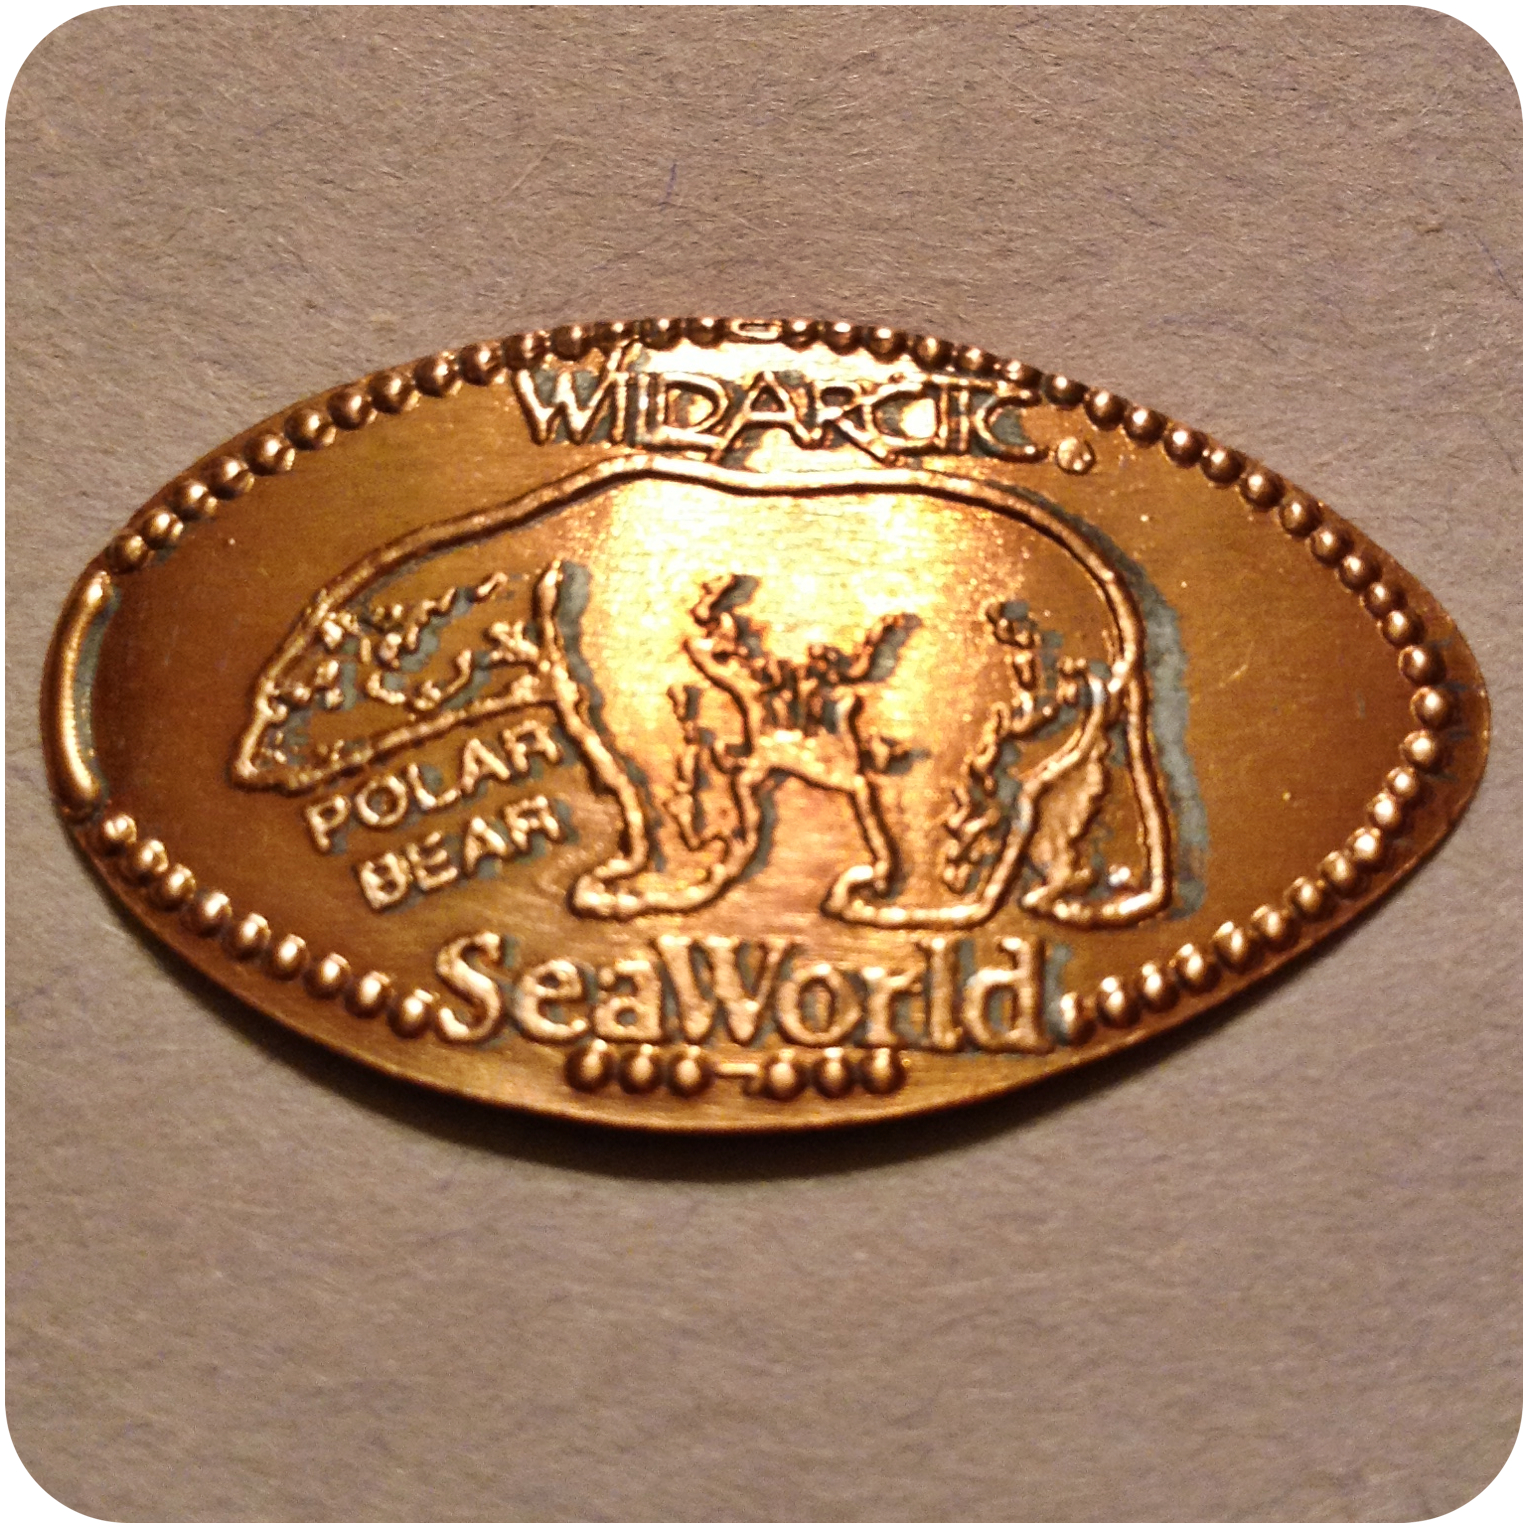 Retired Polar Bear, WildArtic, SeaWorld, San Diego, CA California Elongated Coin